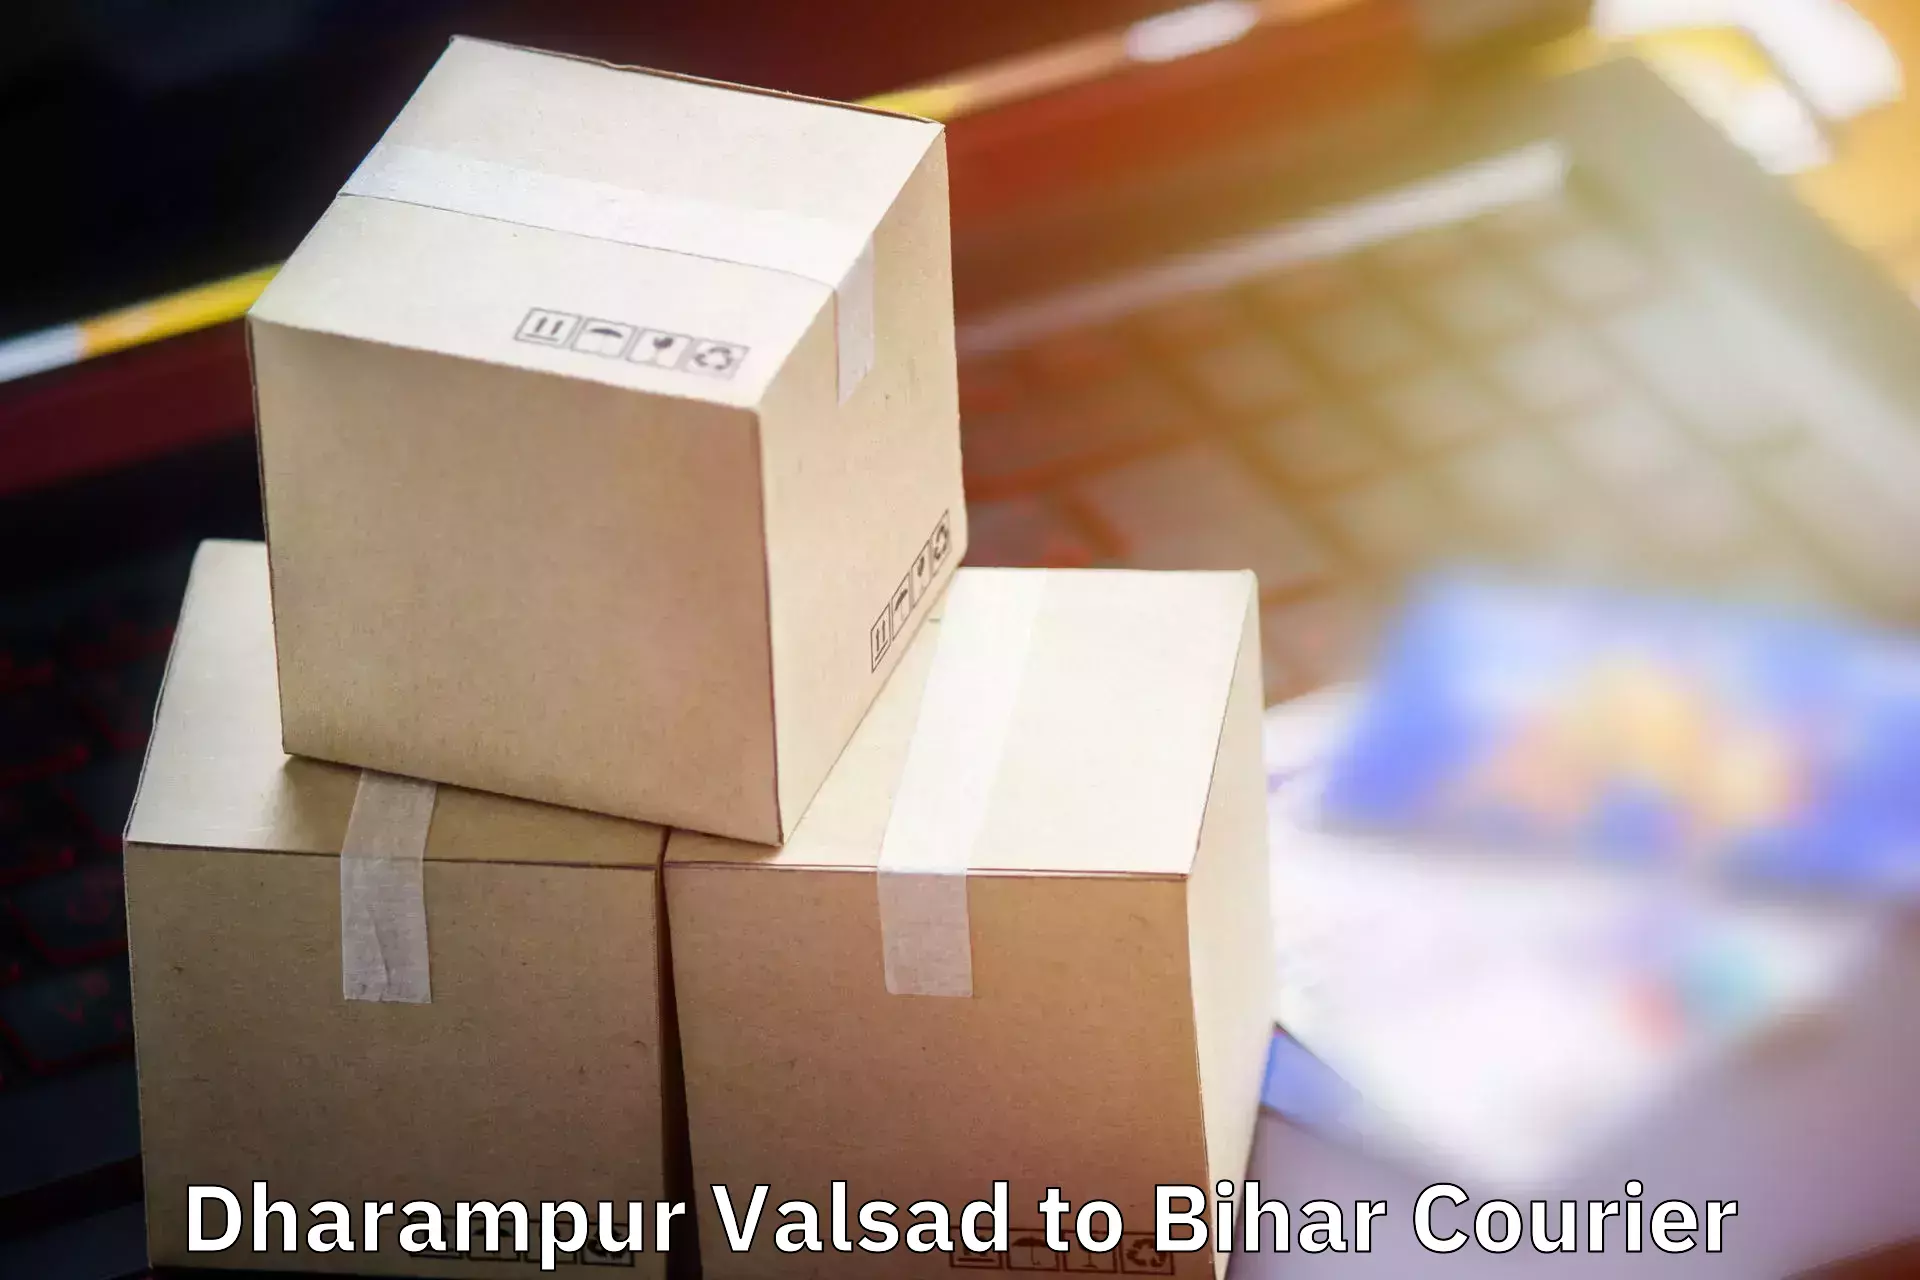 Baggage relocation service Dharampur Valsad to Bihar